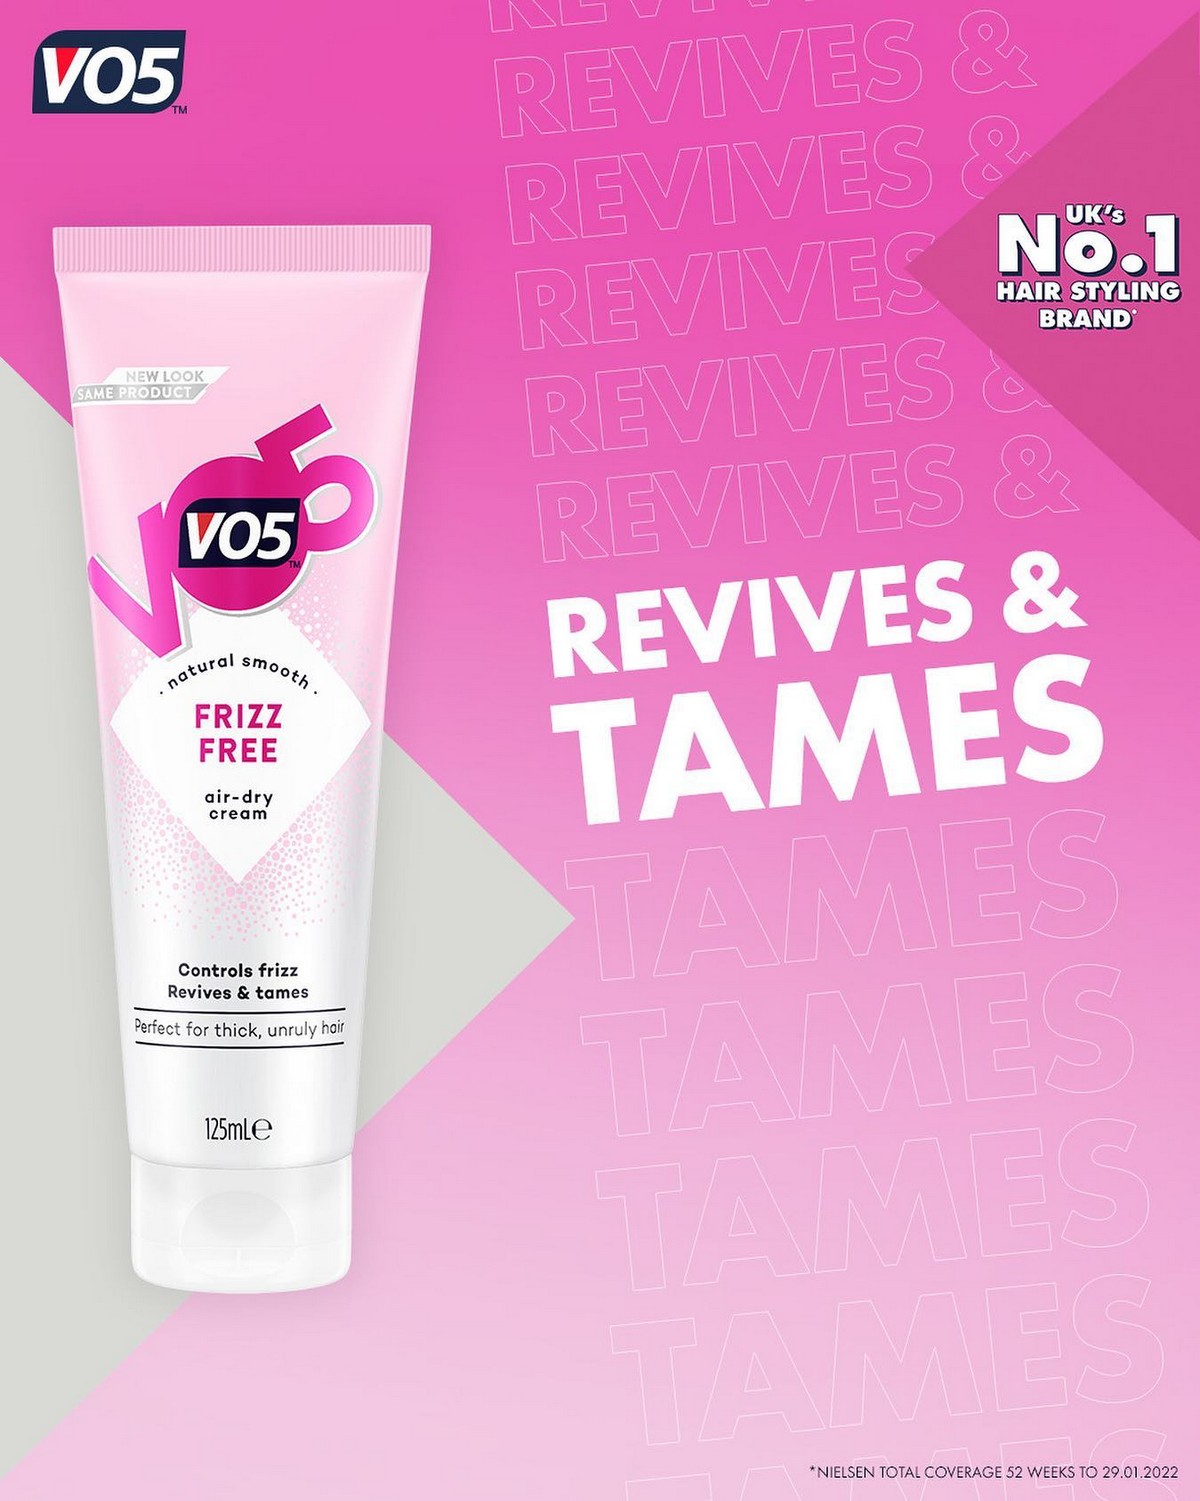 VO5's Frizz Free Air-Dry Cream